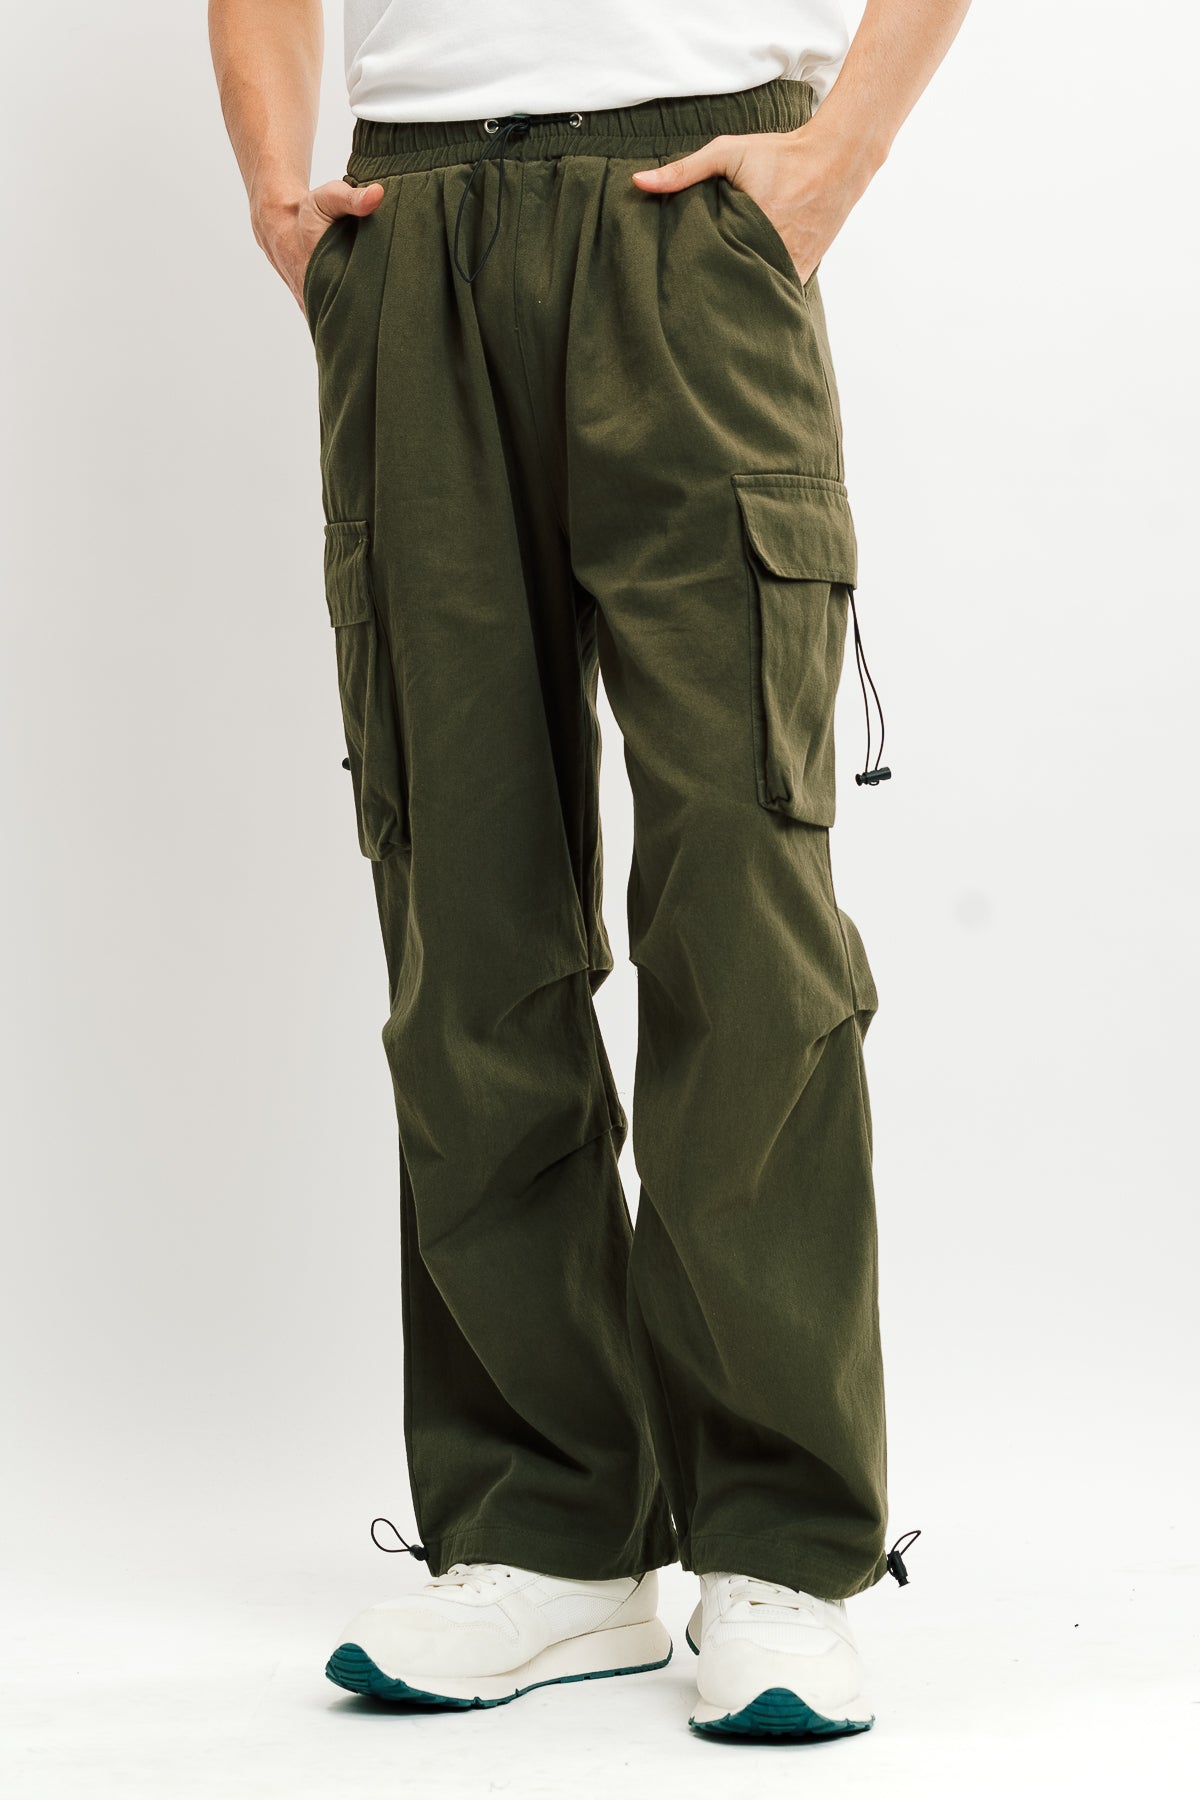 Side Pocket Trousers Men | Men Side Pockets Pants | Japanese Men's Pants - Mens  Cargo - Aliexpress